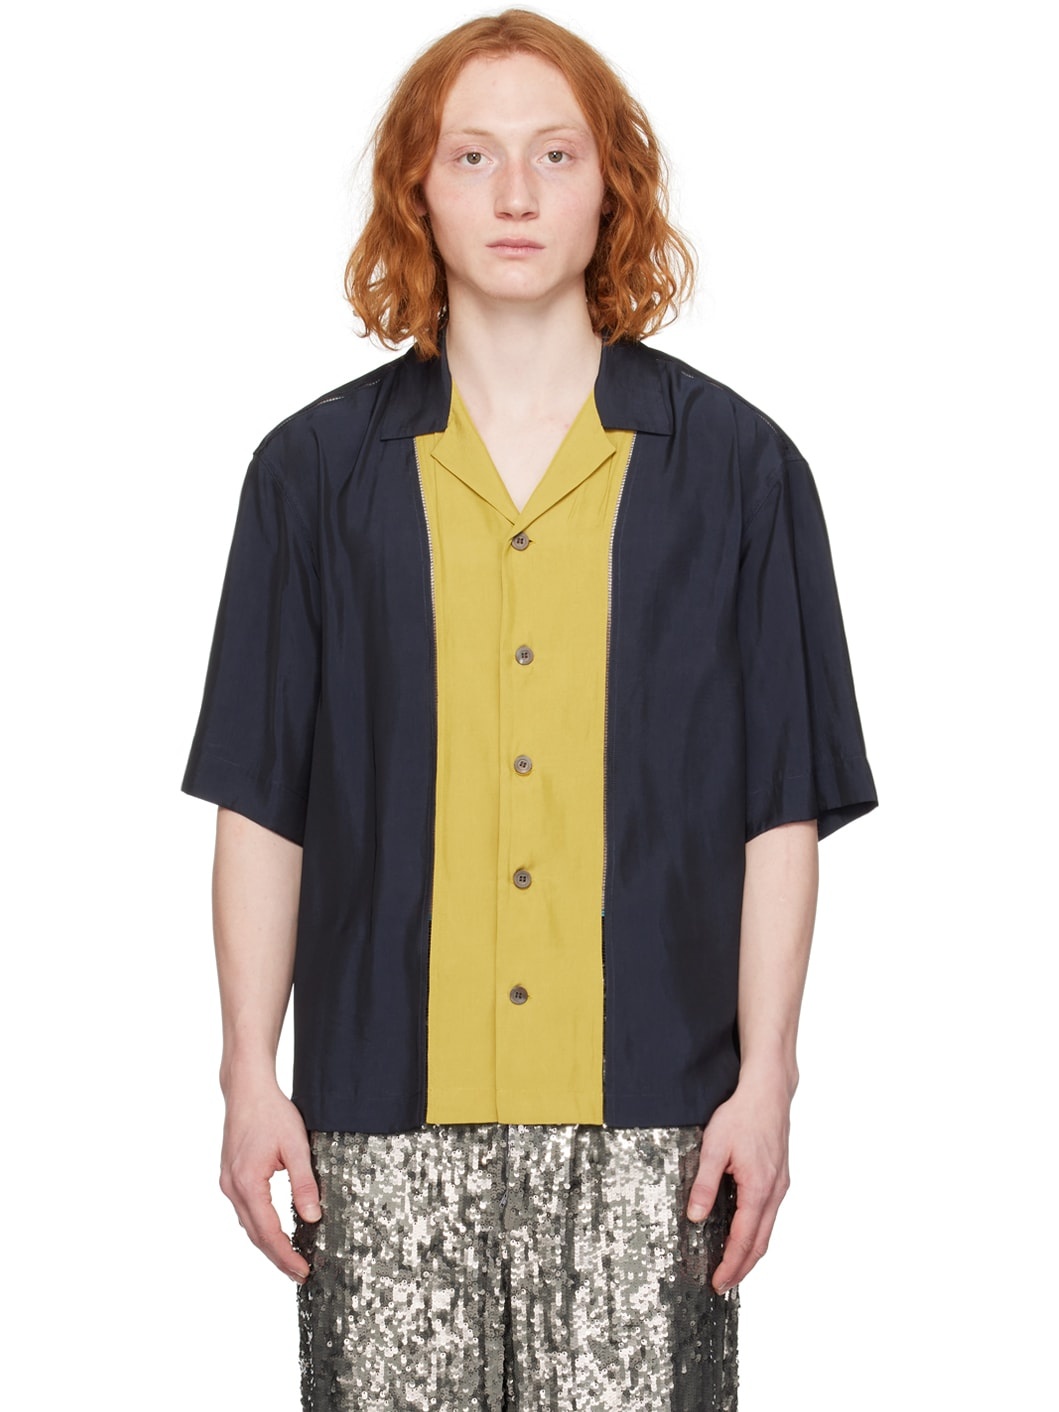 Black & Yellow Paneled Shirt - 1